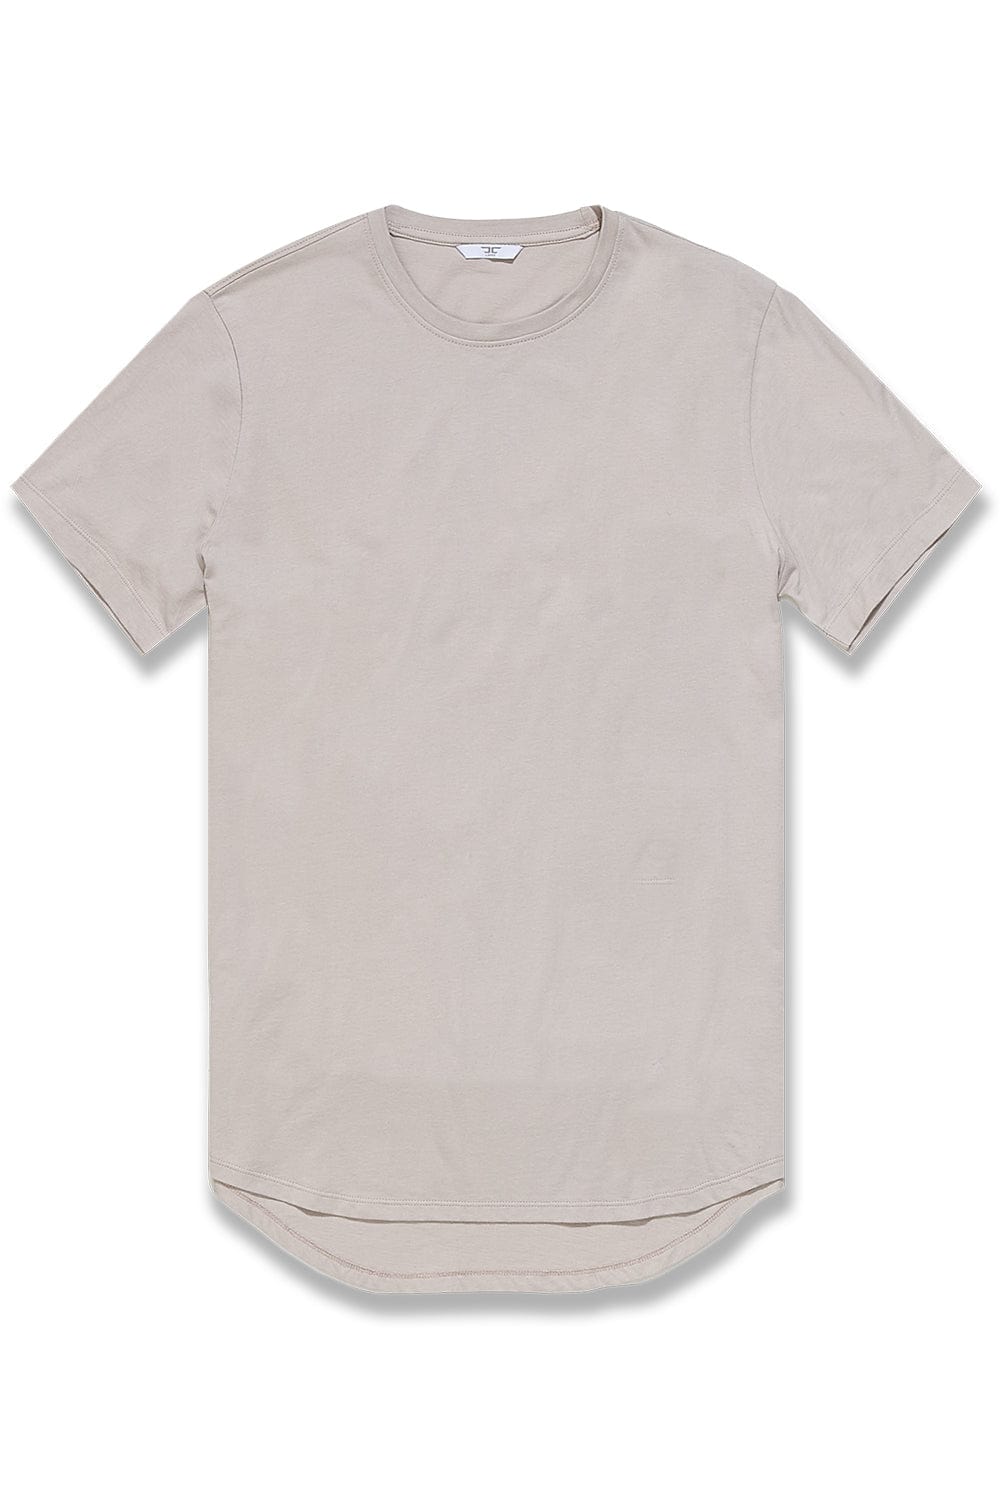 Jordan Craig Scallop T-Shirt (Athletic Fit) Taupe / S